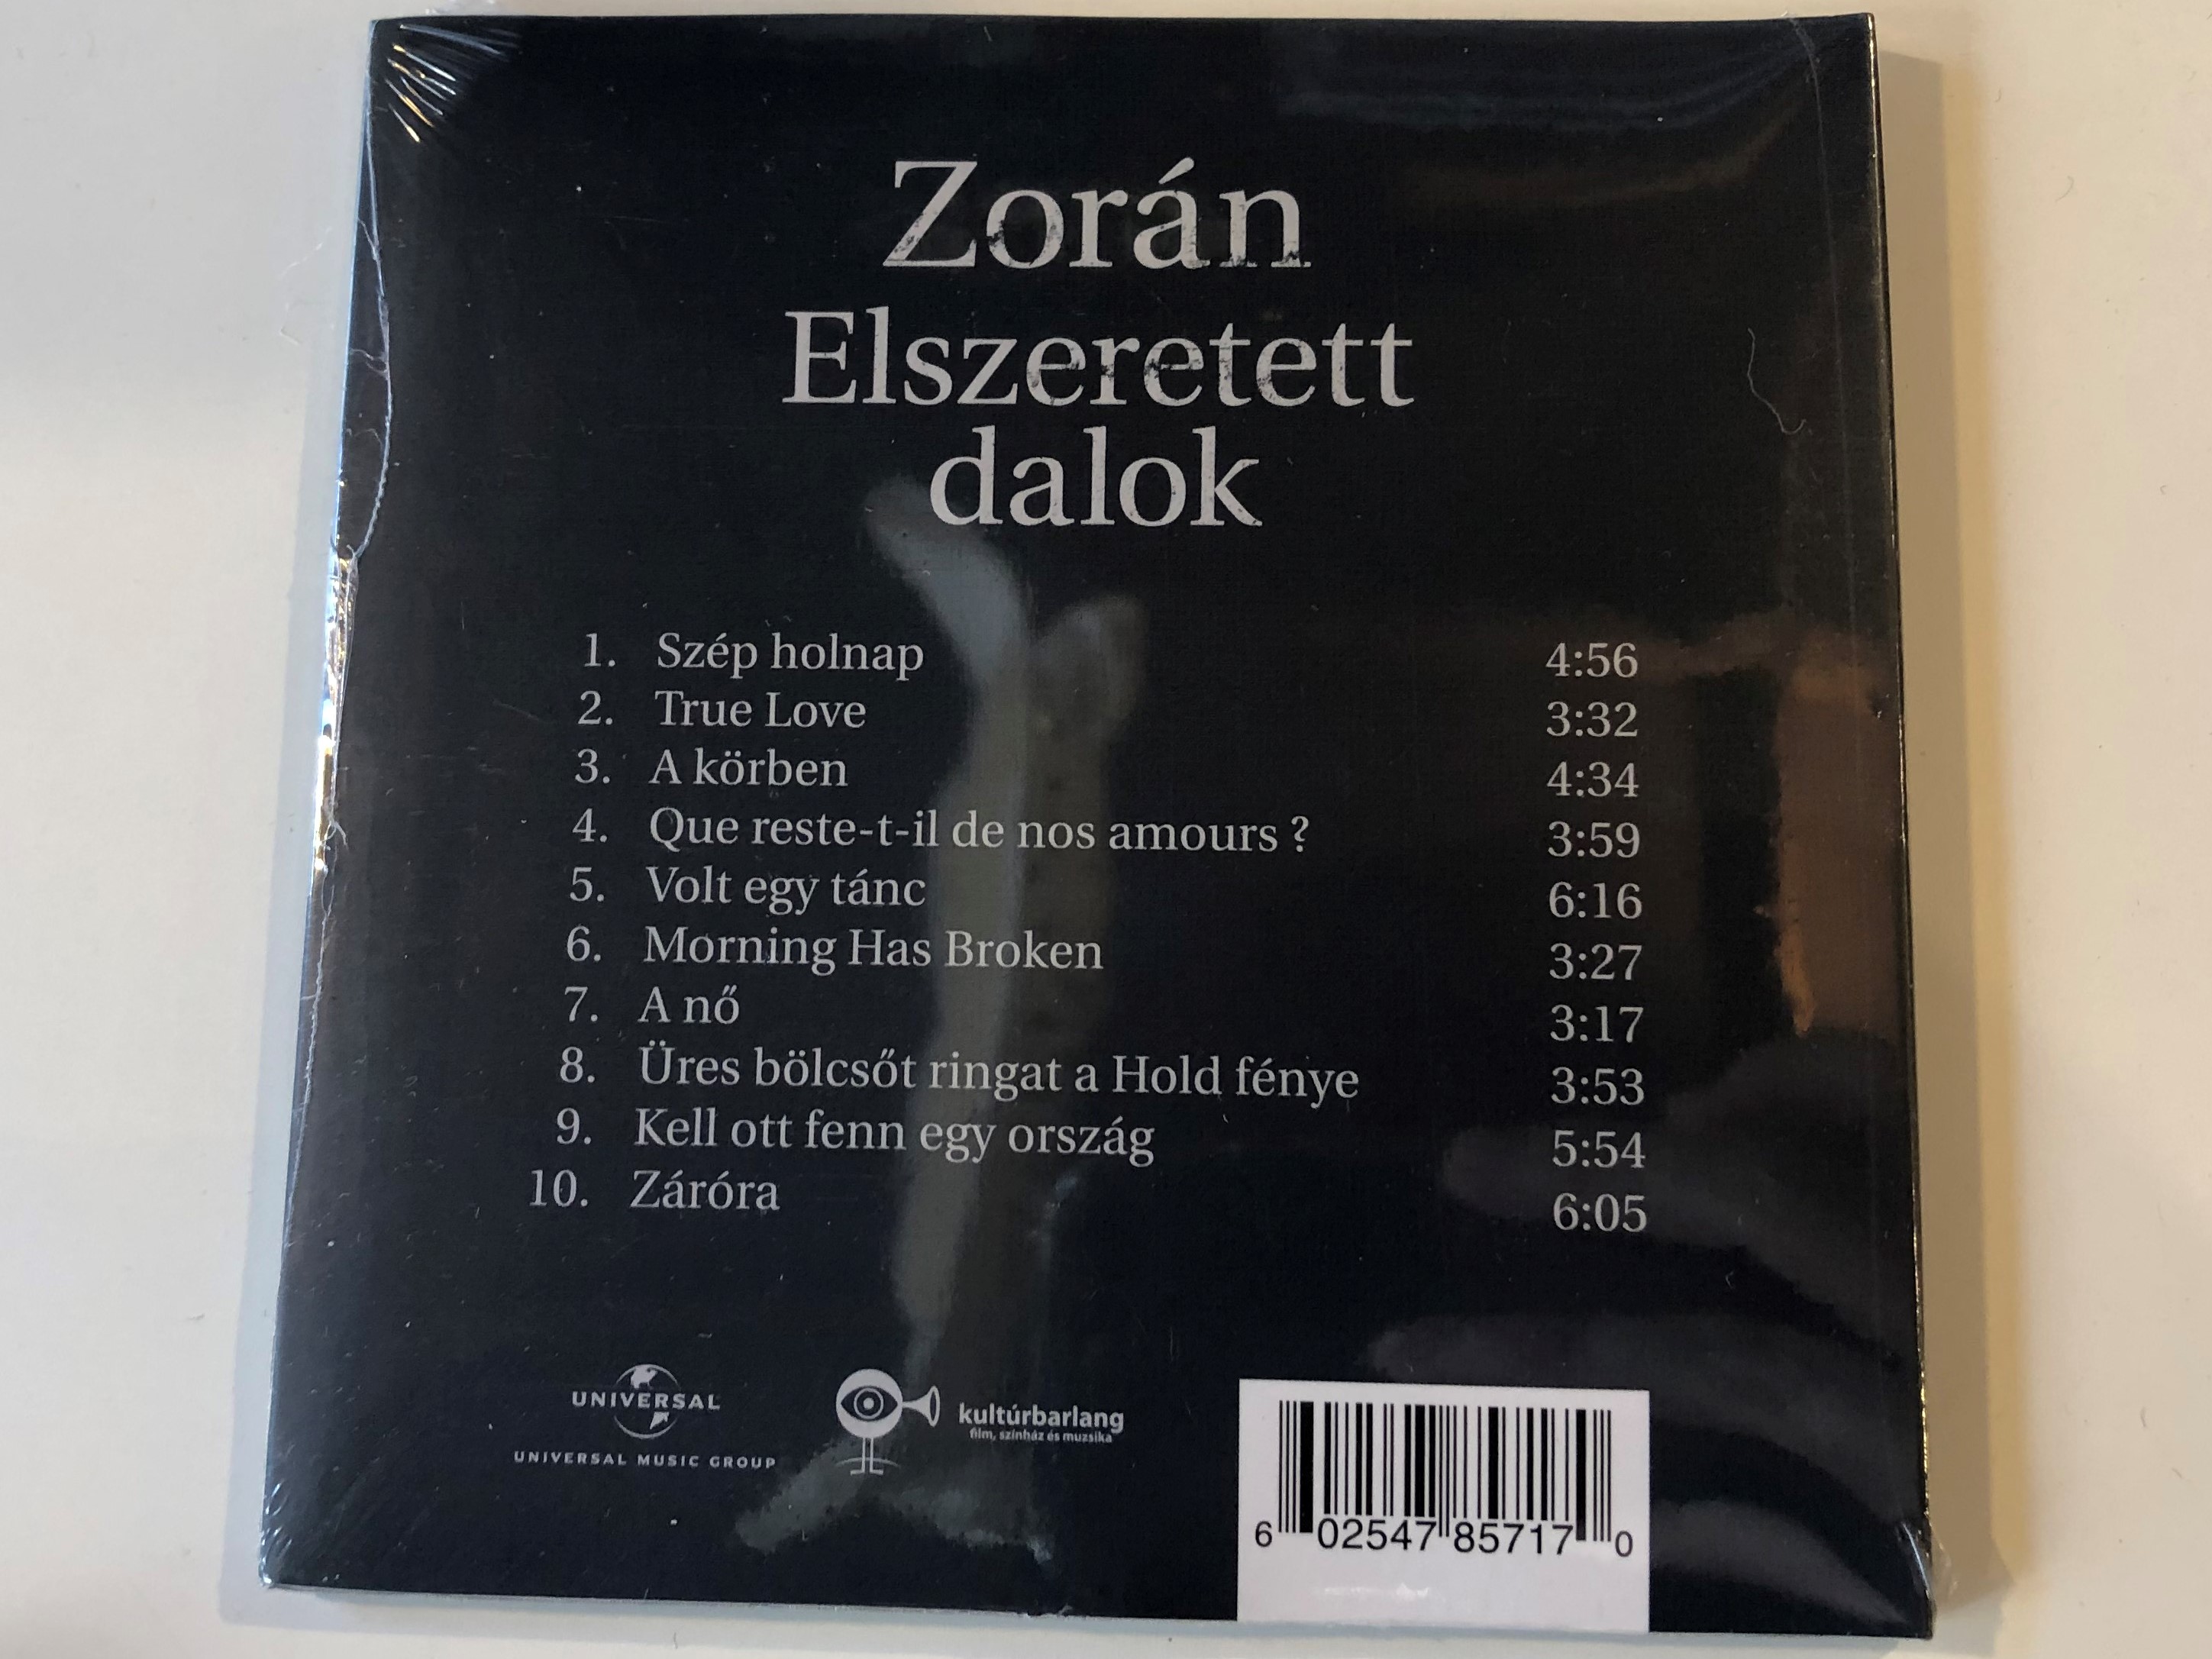 zor-n-elszeretett-dalok-universal-music-audio-cd-60254785717-2-.jpg